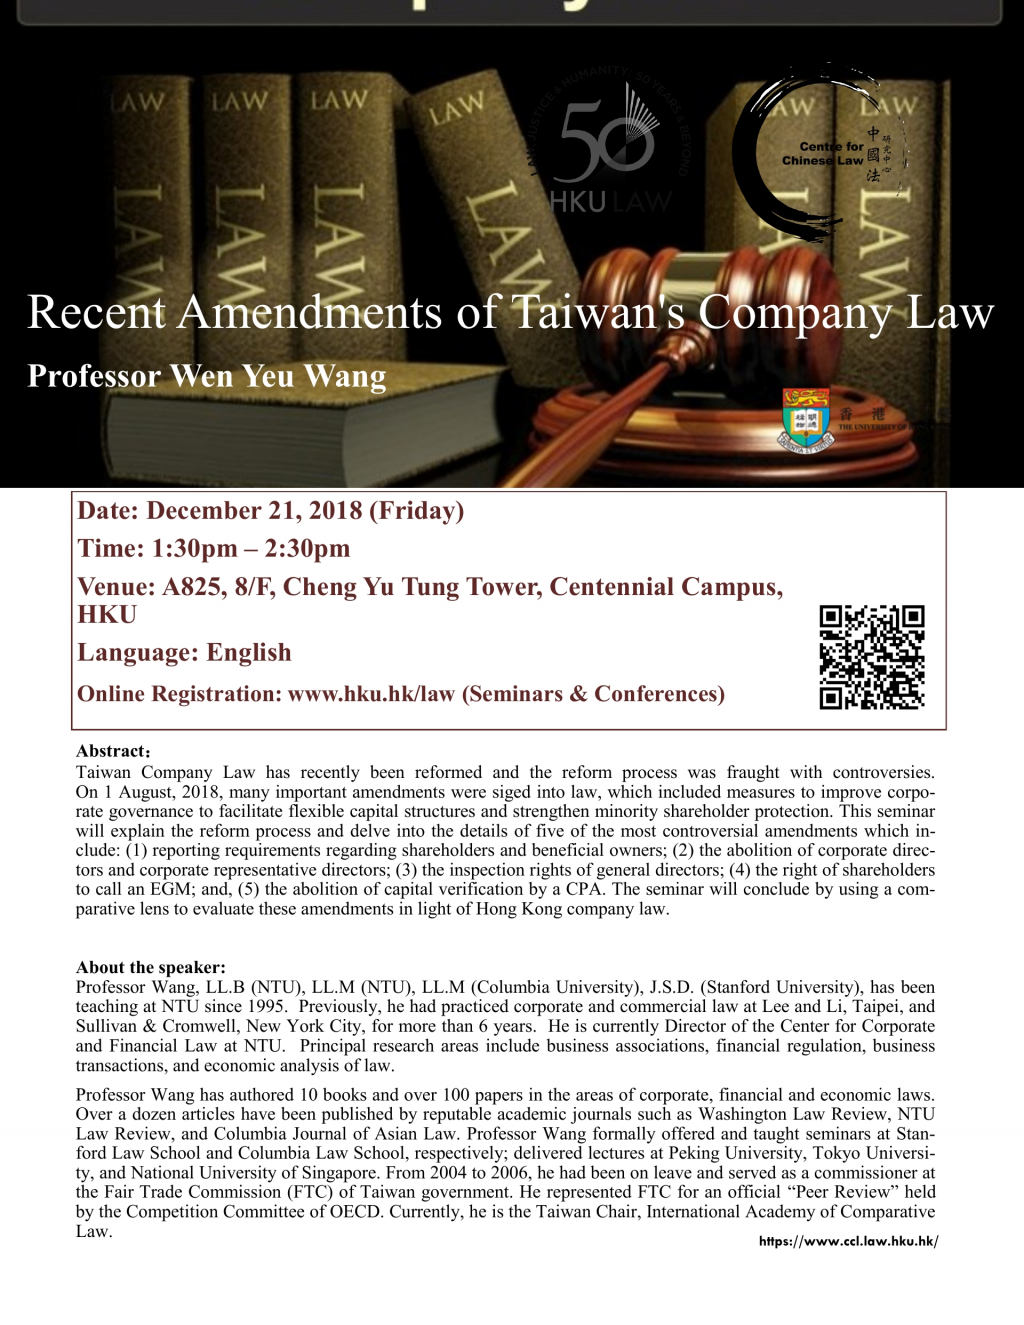 Recent Amendments of Taiwan's Company Law